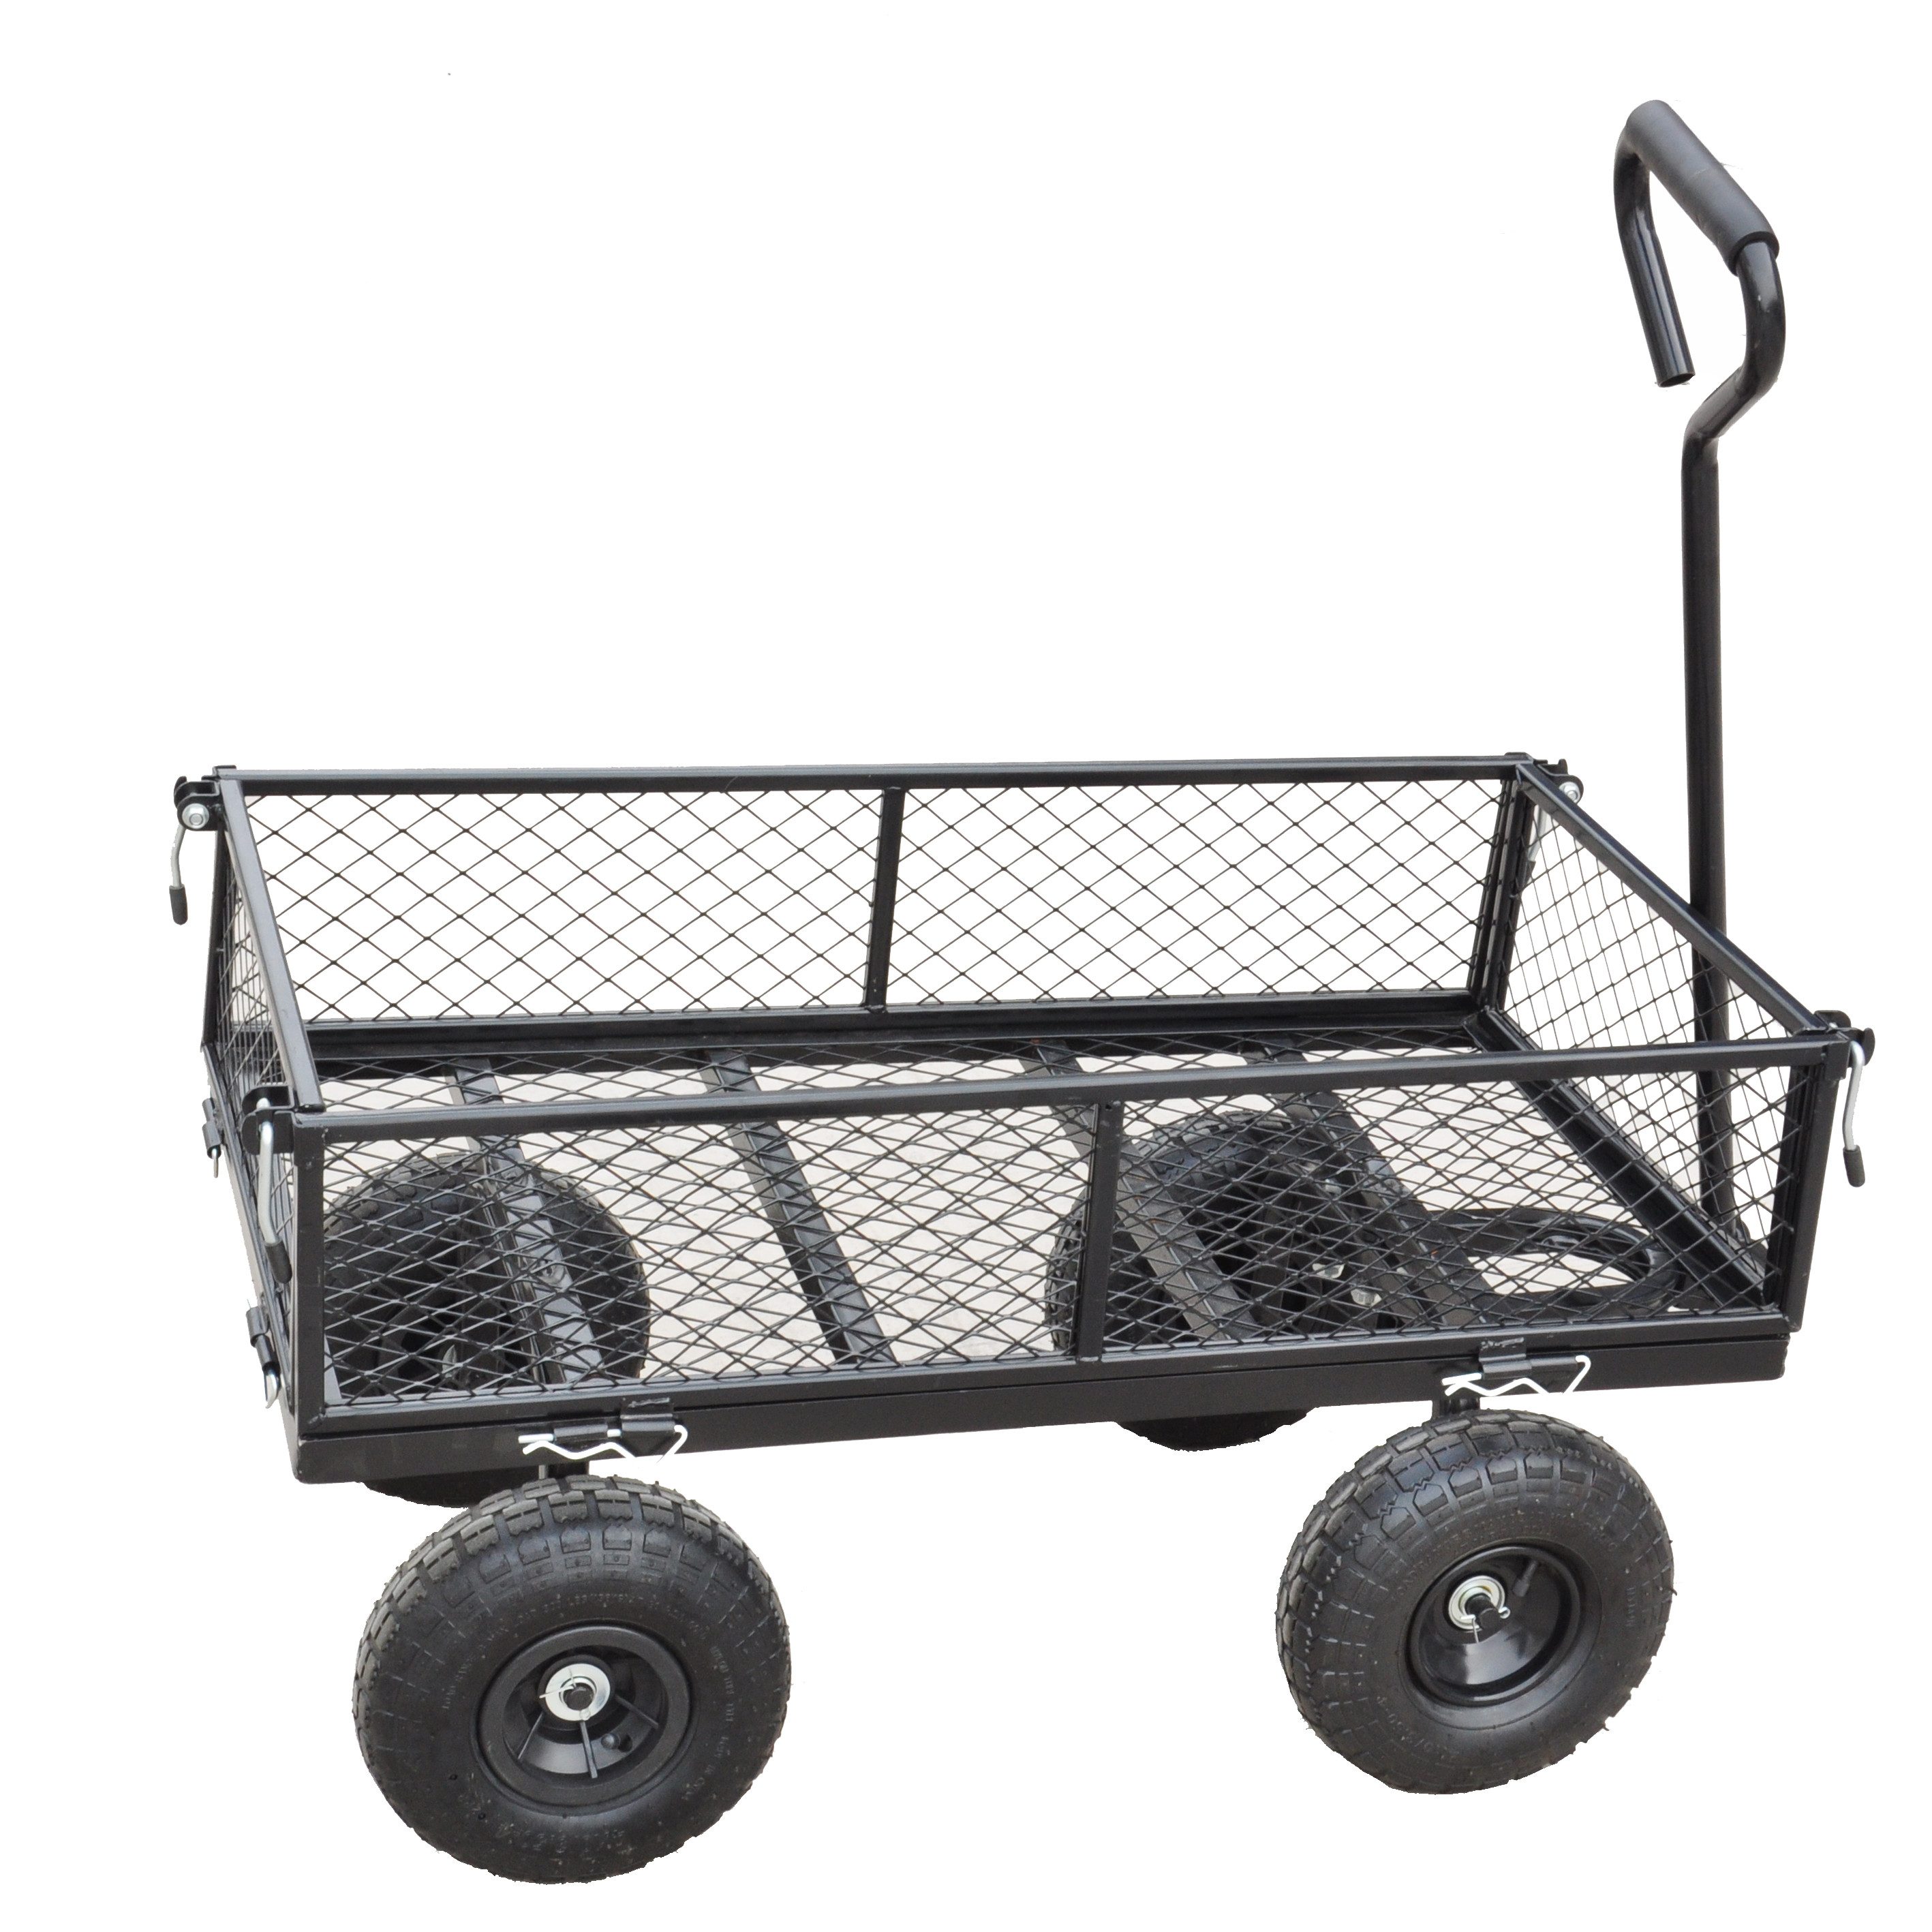 Tongtong Sackkarre Wagon Cart Gartenkarren den Transport von Brennholz (schwarz)